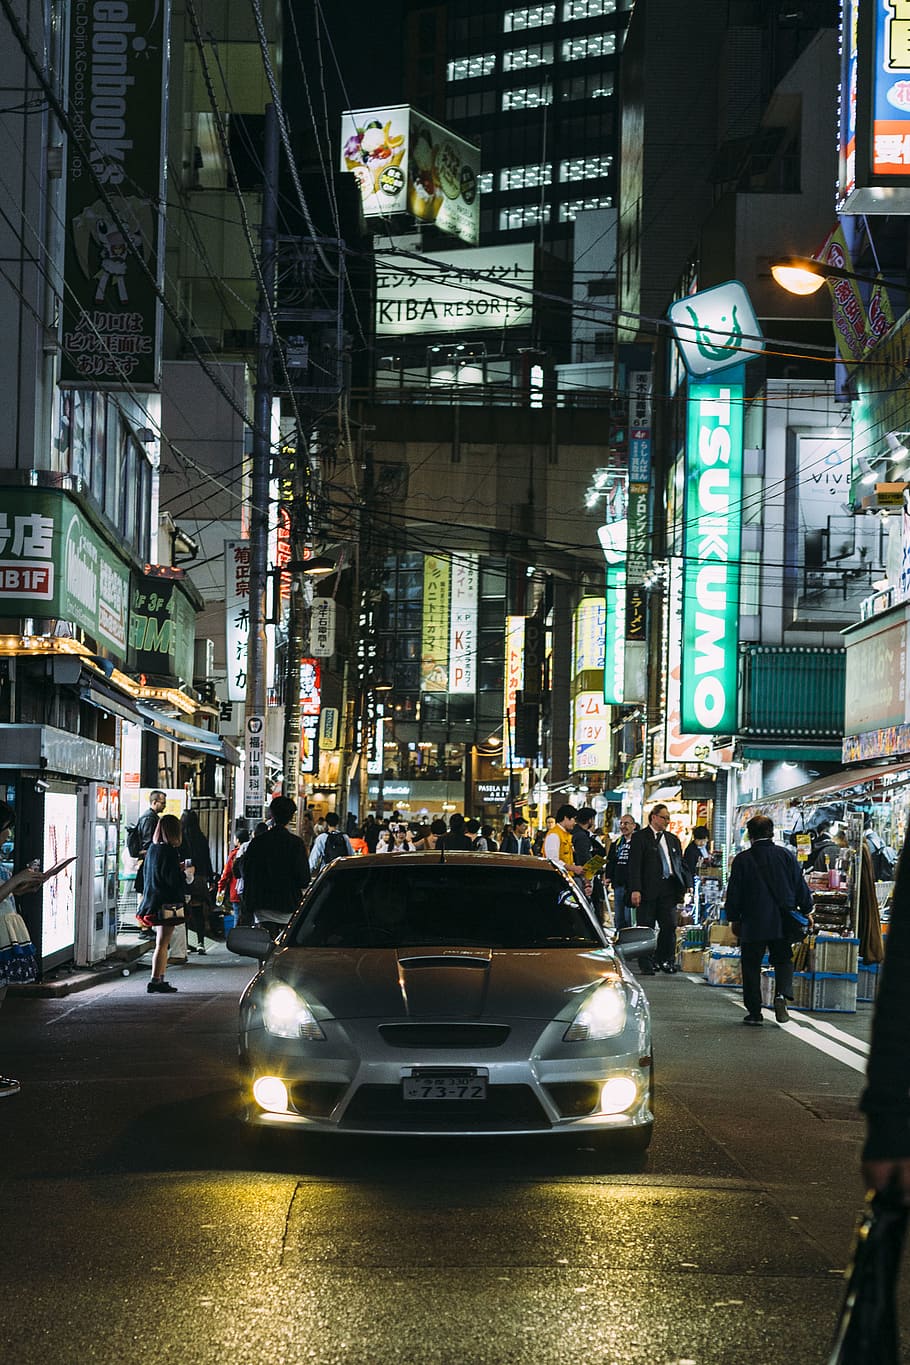 tokyo, car, travel, nightlife, lights, exploring, japan, mode of transportation